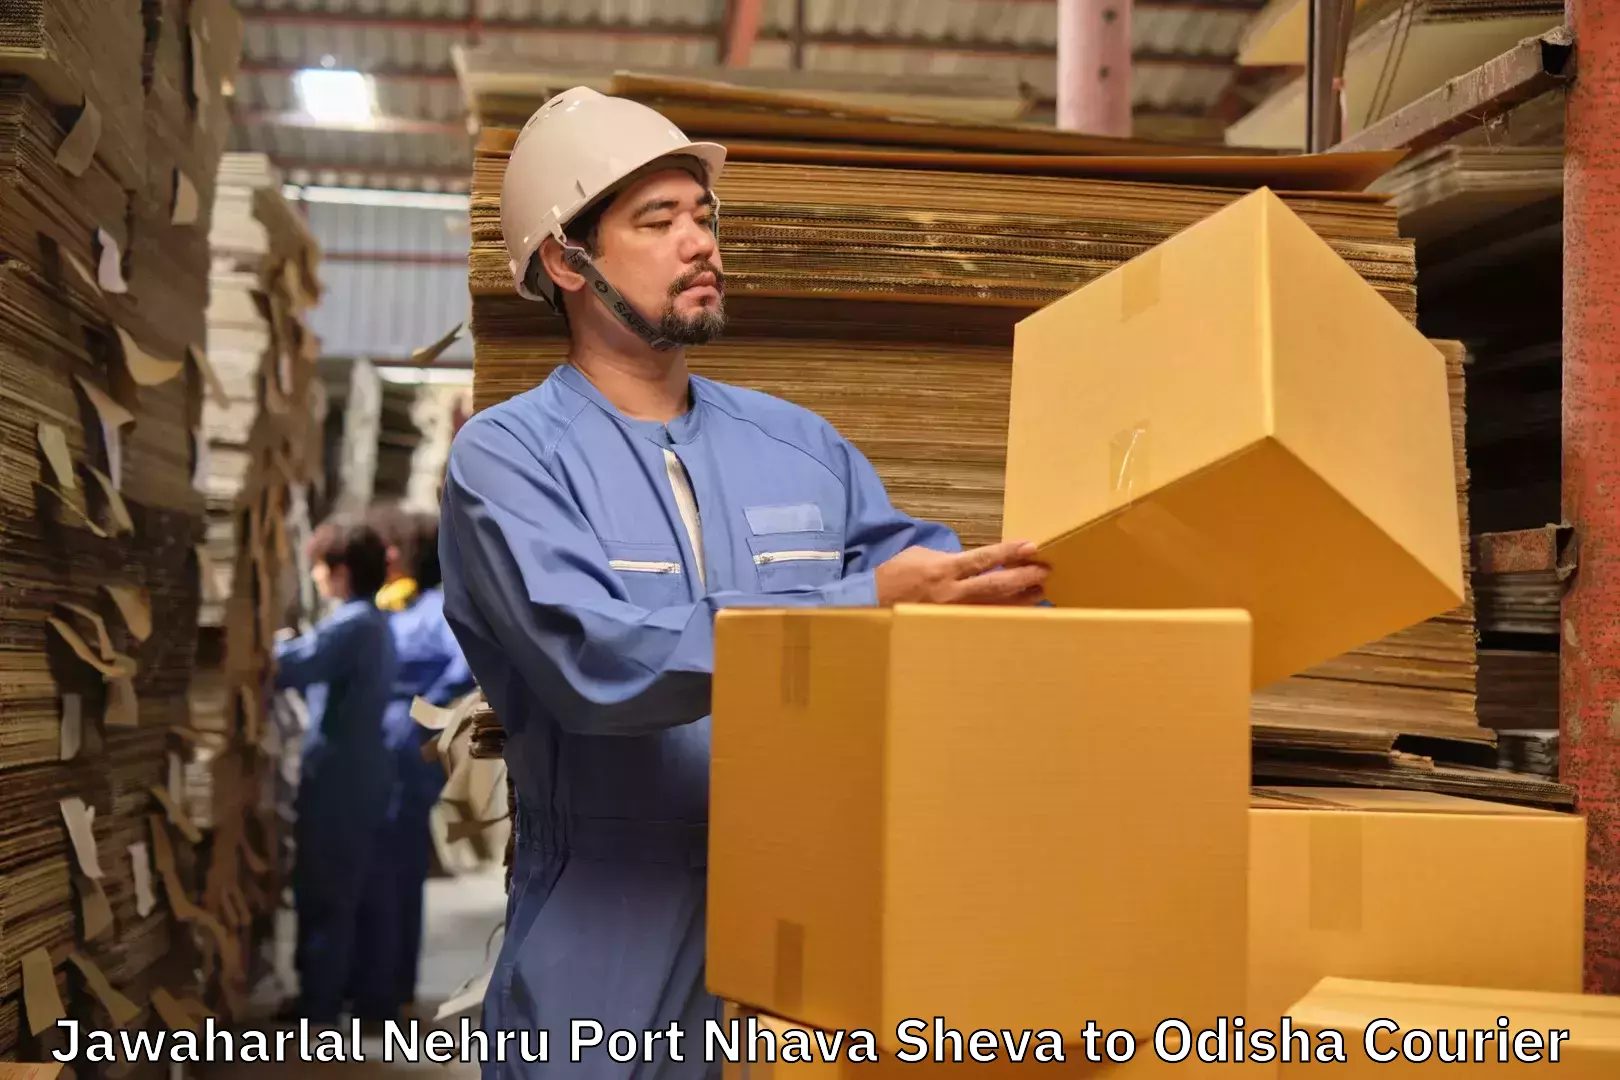 Luggage delivery network Jawaharlal Nehru Port Nhava Sheva to Angul